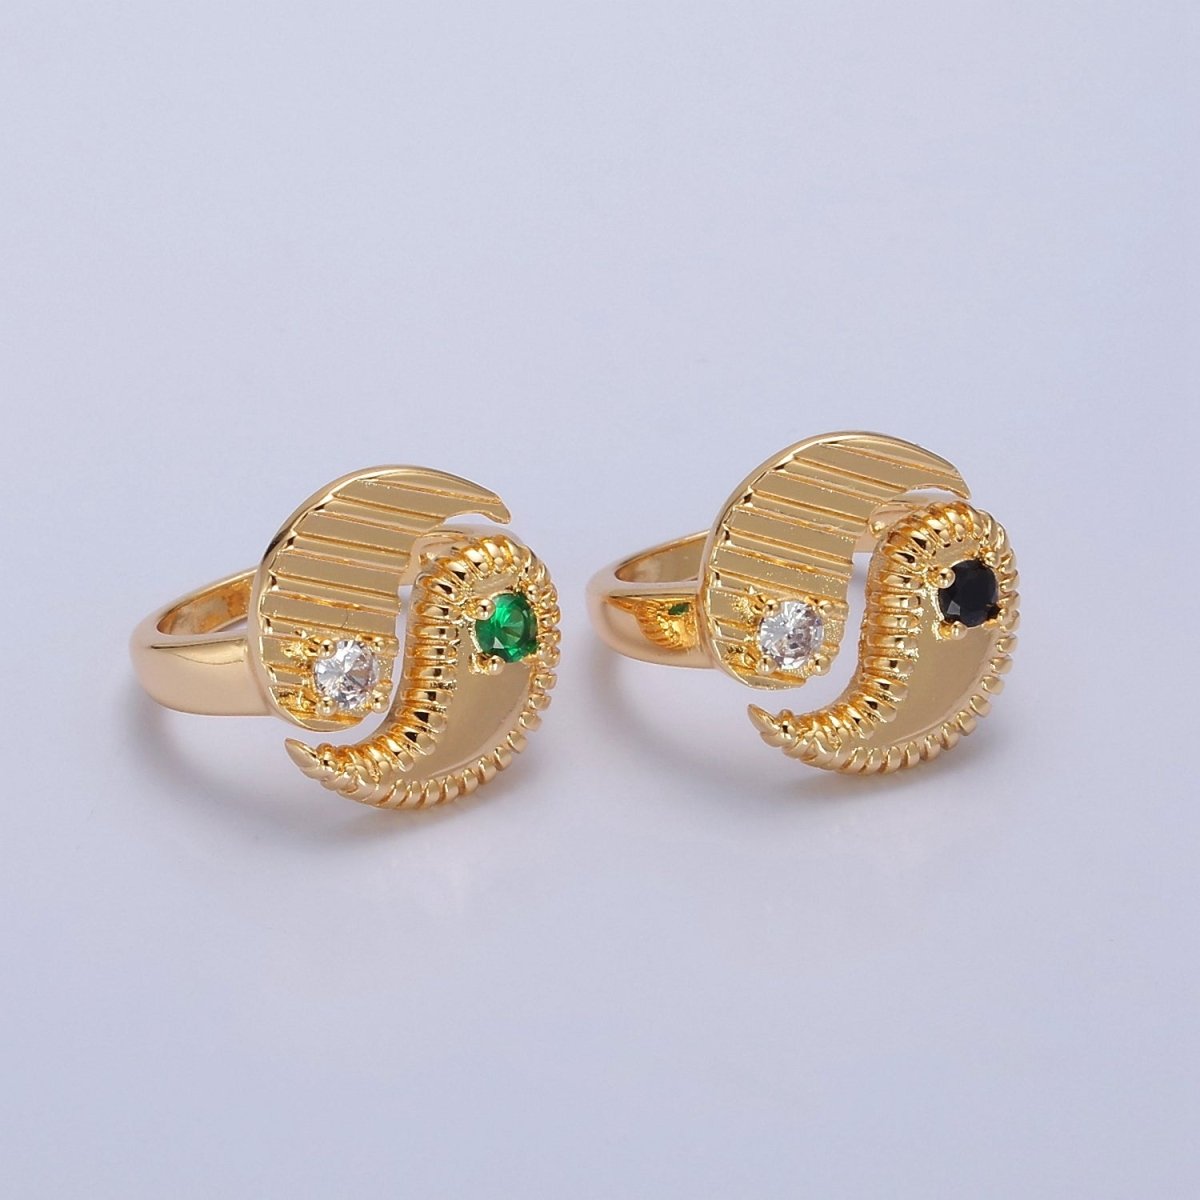 Yin Yang Ring, Adjustable Trendy Yin Yang Ring, Gold Plated, Statement Ring, Trendy Rings O2146 O2147 - DLUXCA